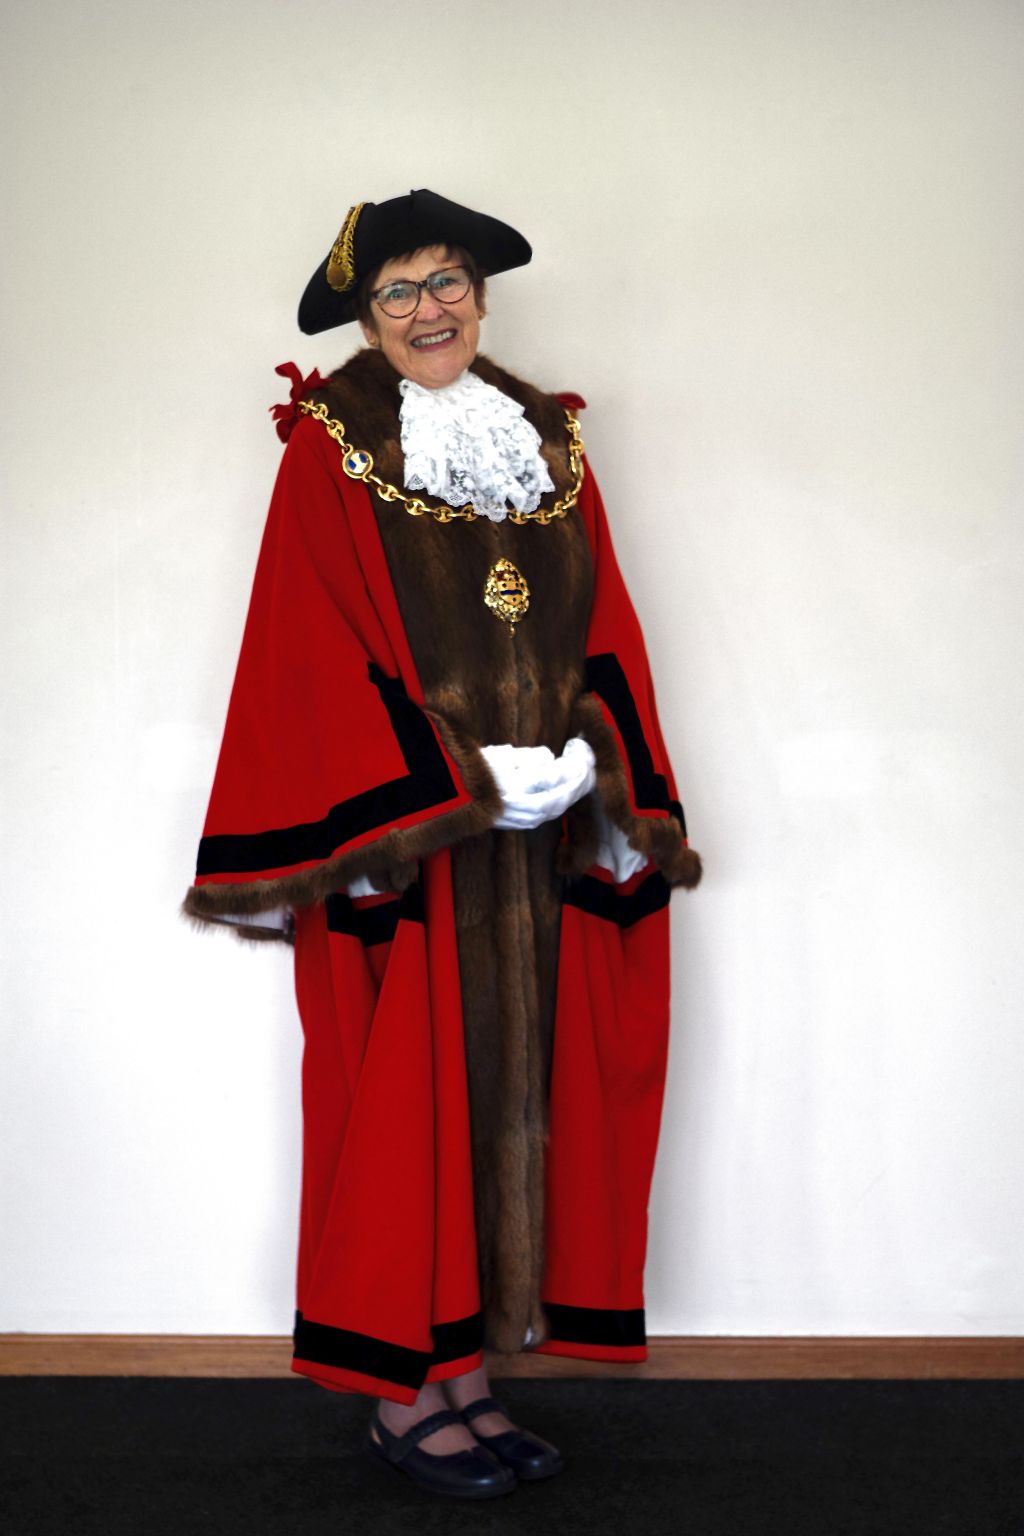 Maidstone has a new Mayor image